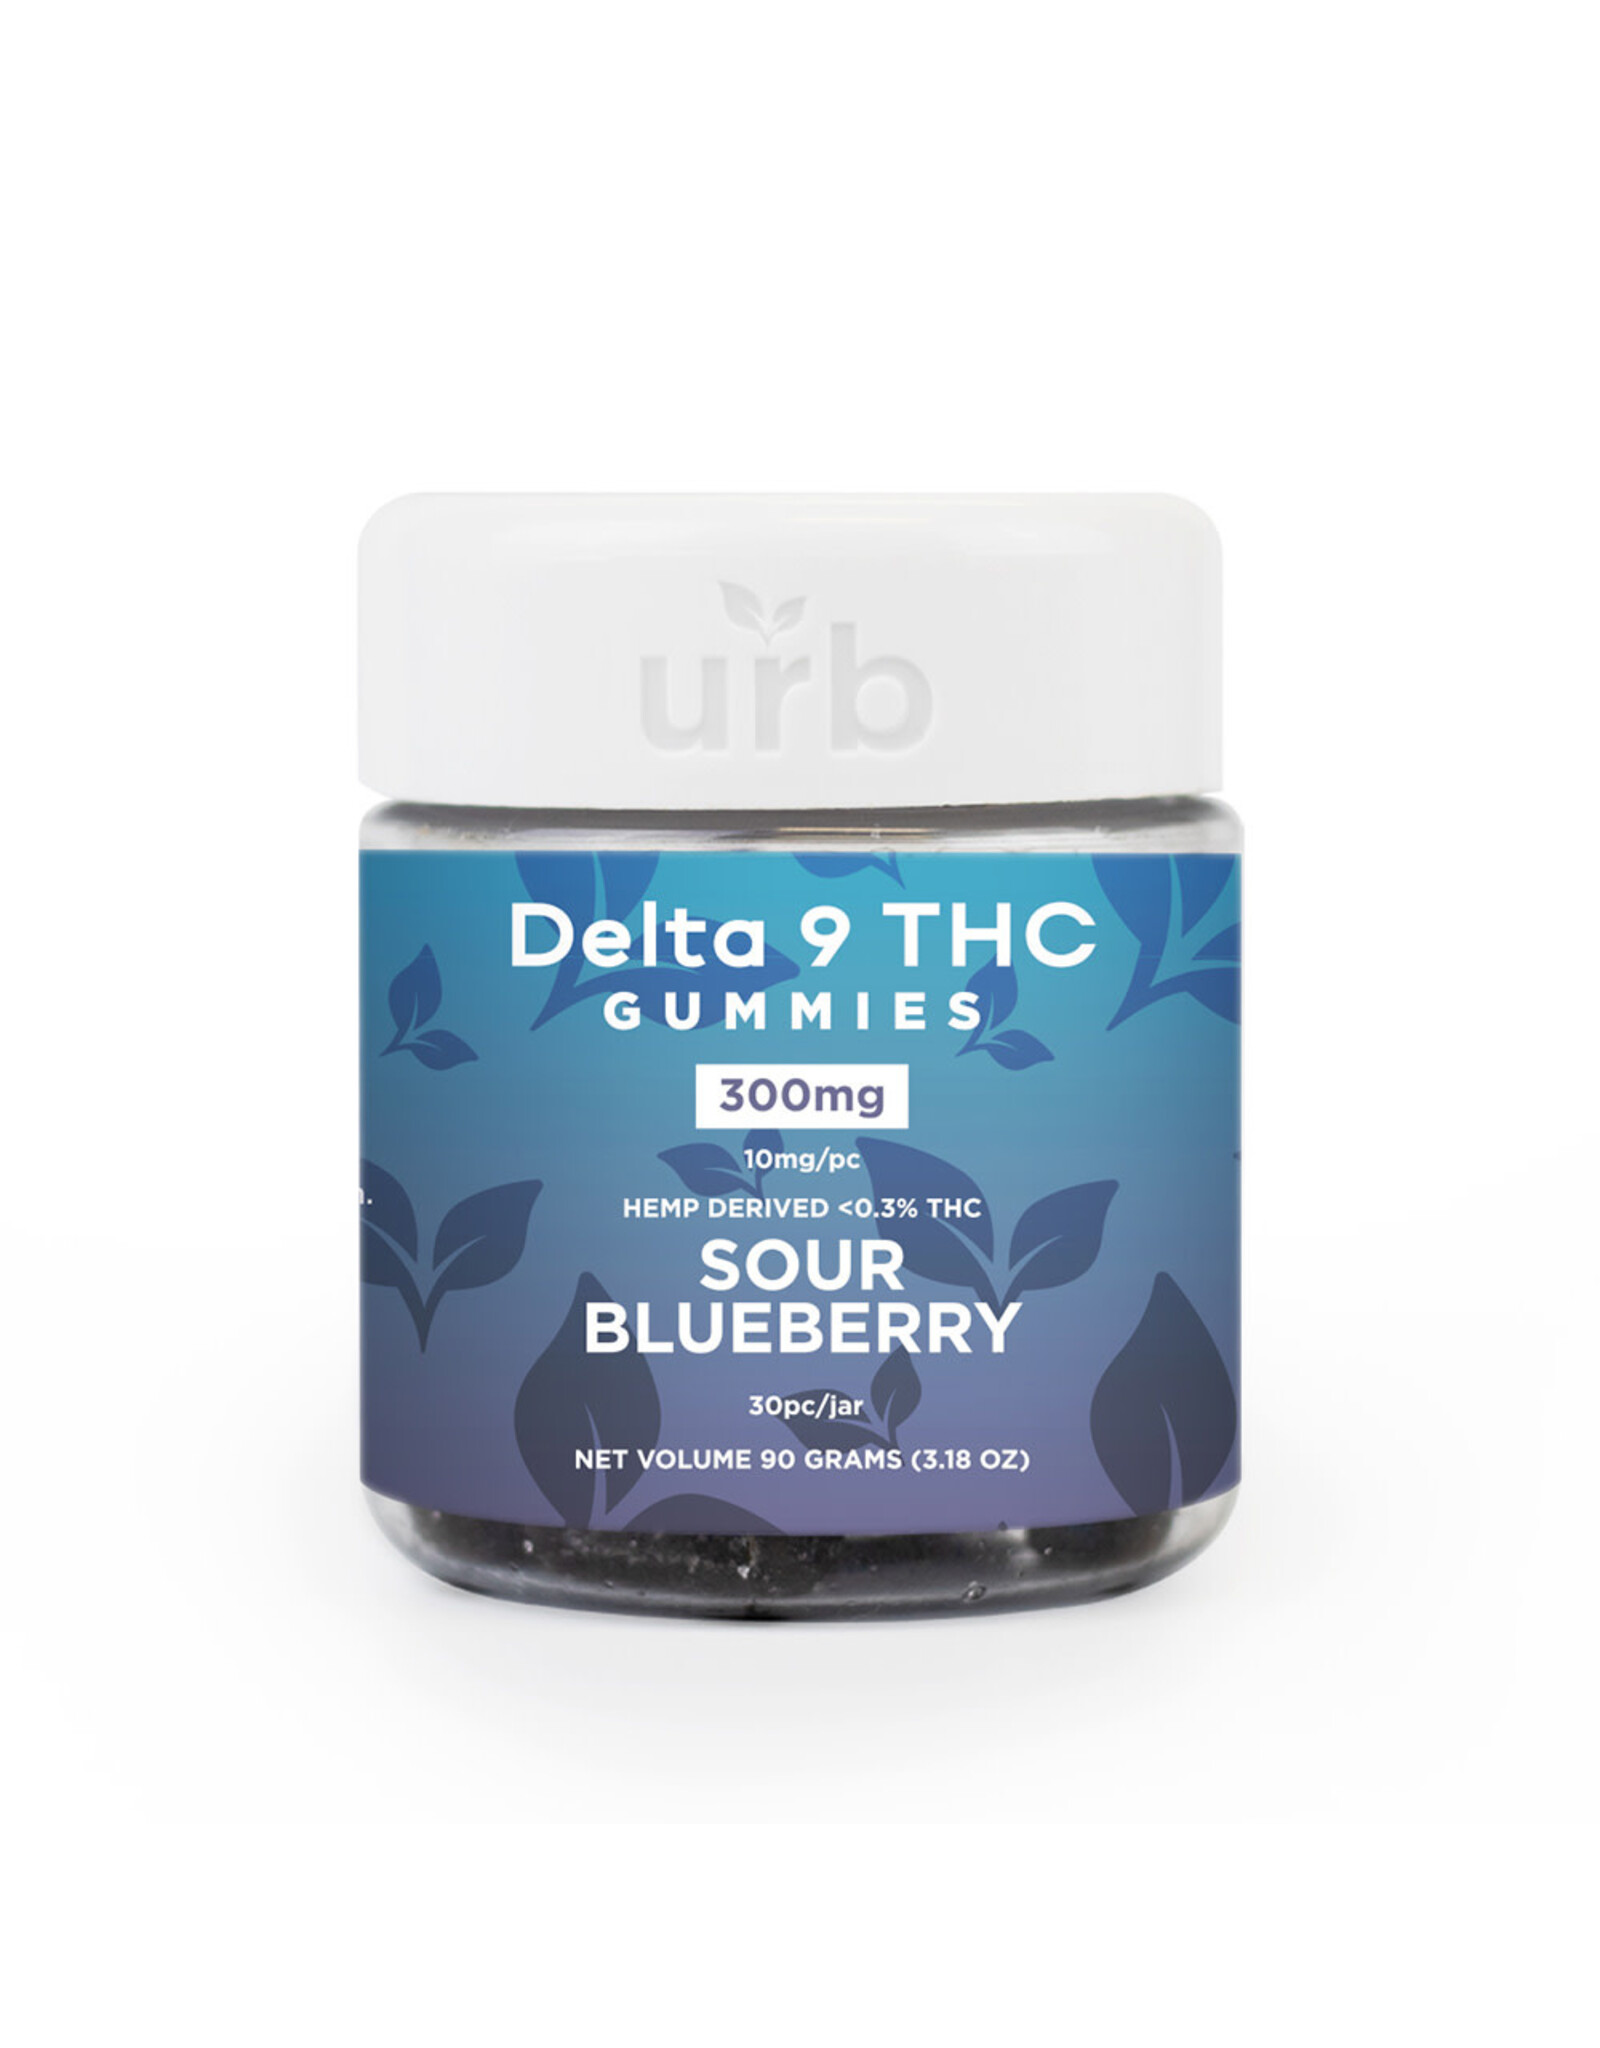 URB URB Delta 9 THC Sour Blueberry Vegan Gummies 10mg 30ct